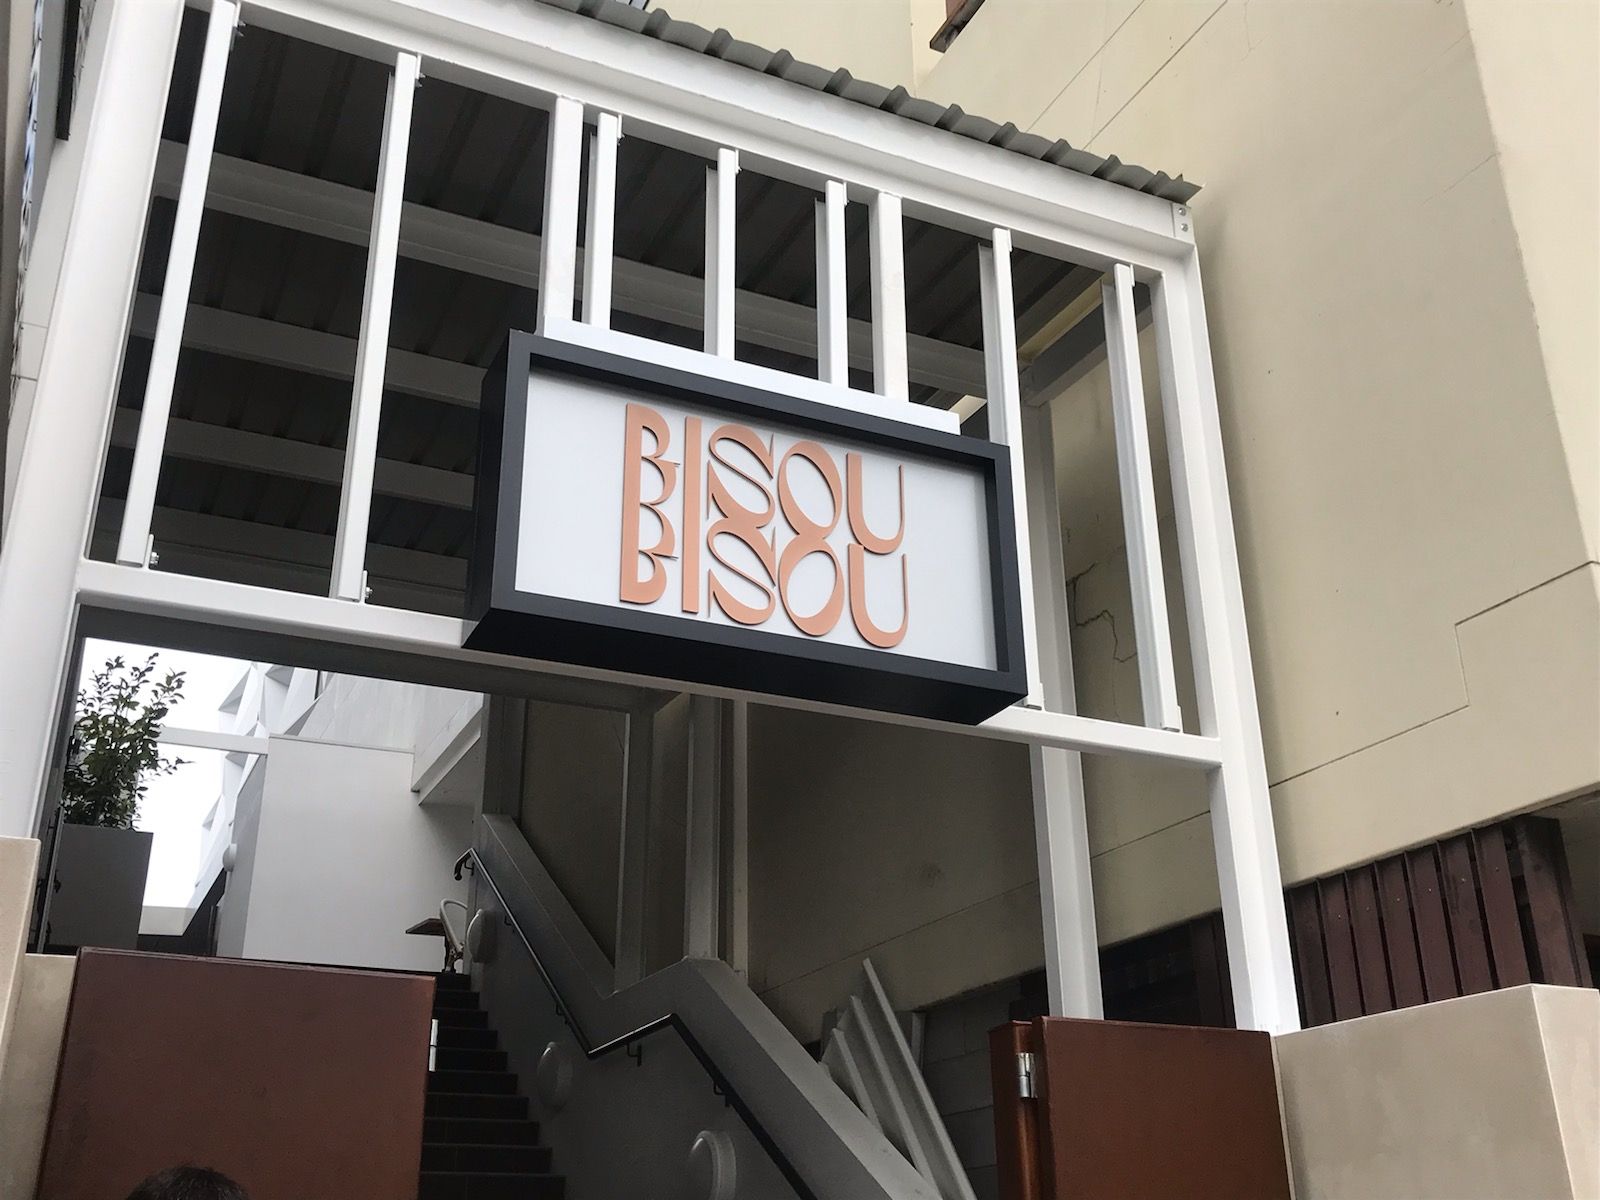 Bisou Bisou Illuminated Lightbox Signage